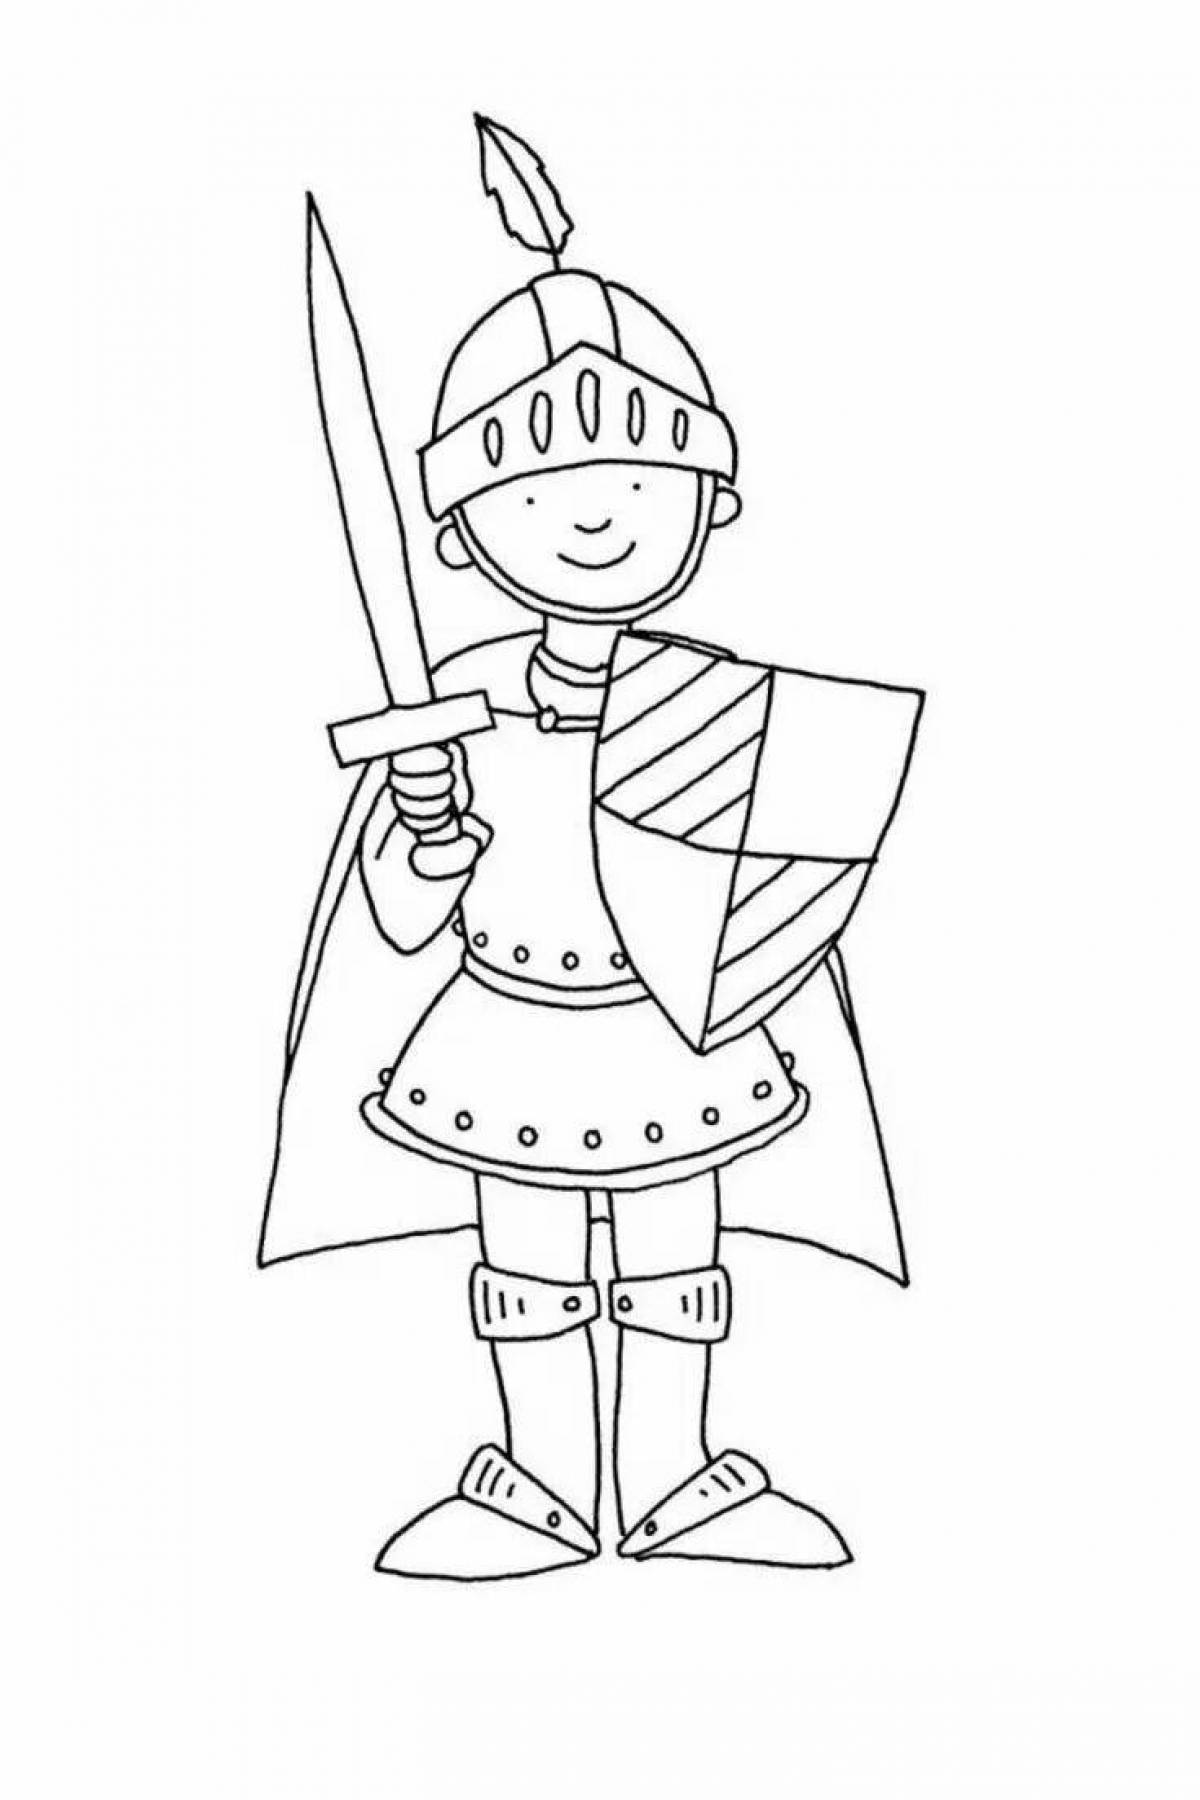 Decisive armor knight coloring book